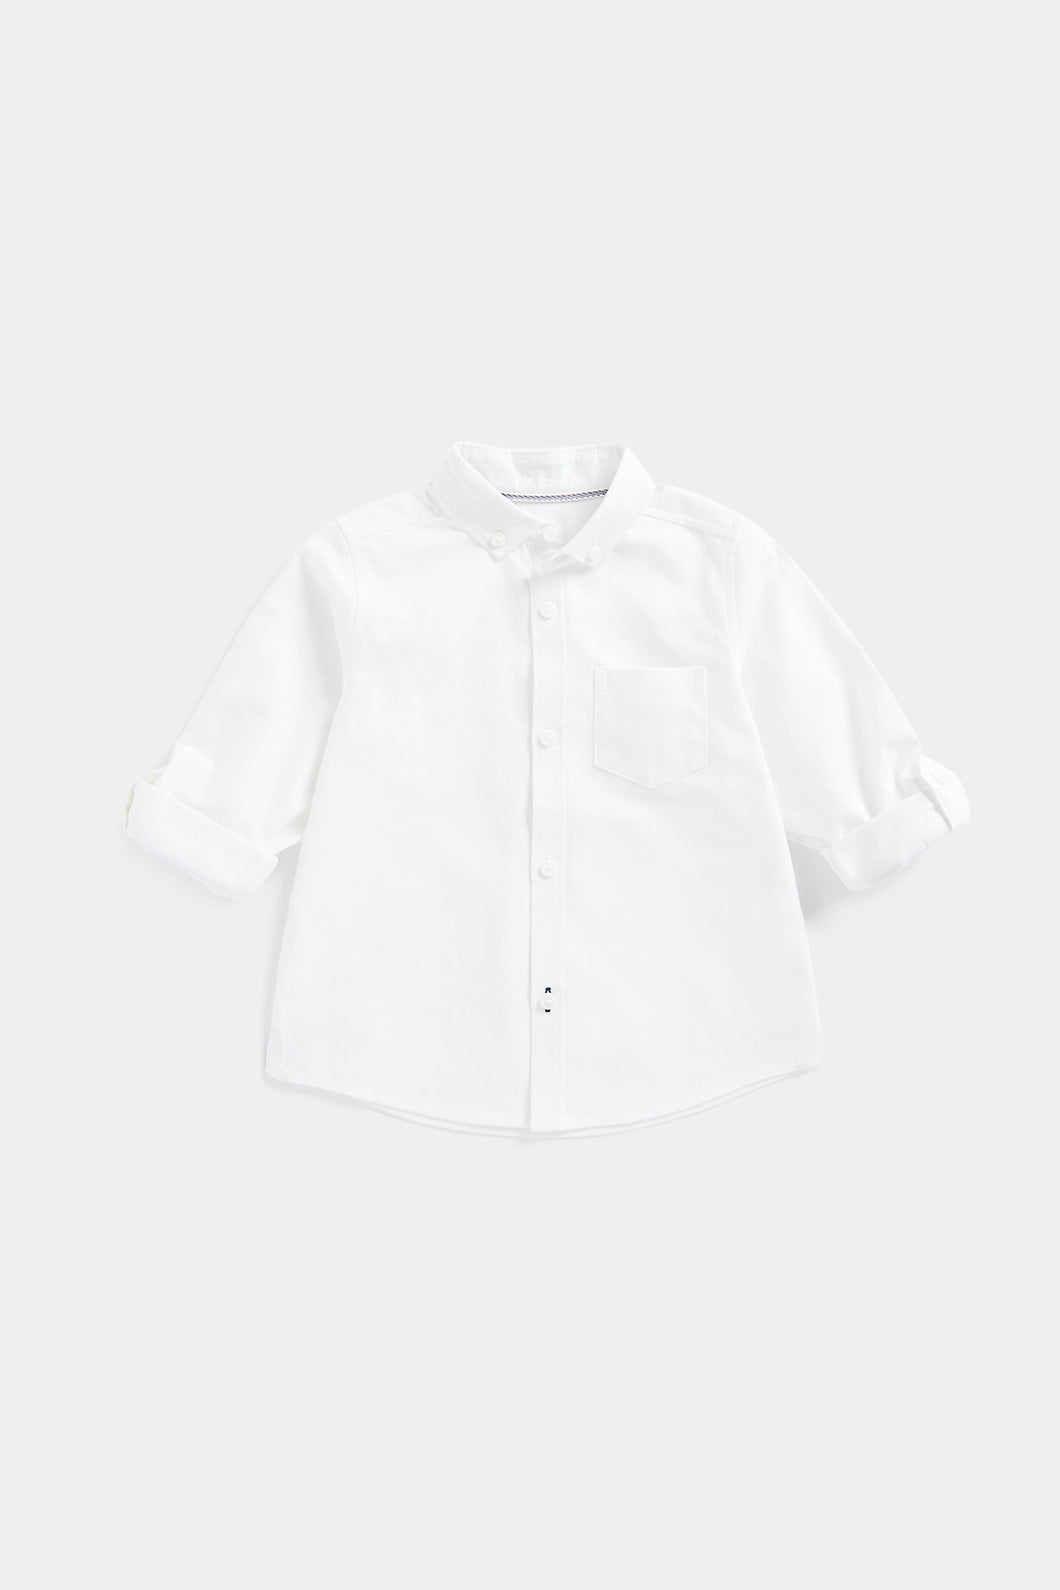 Mothercare White Cotton Shirt